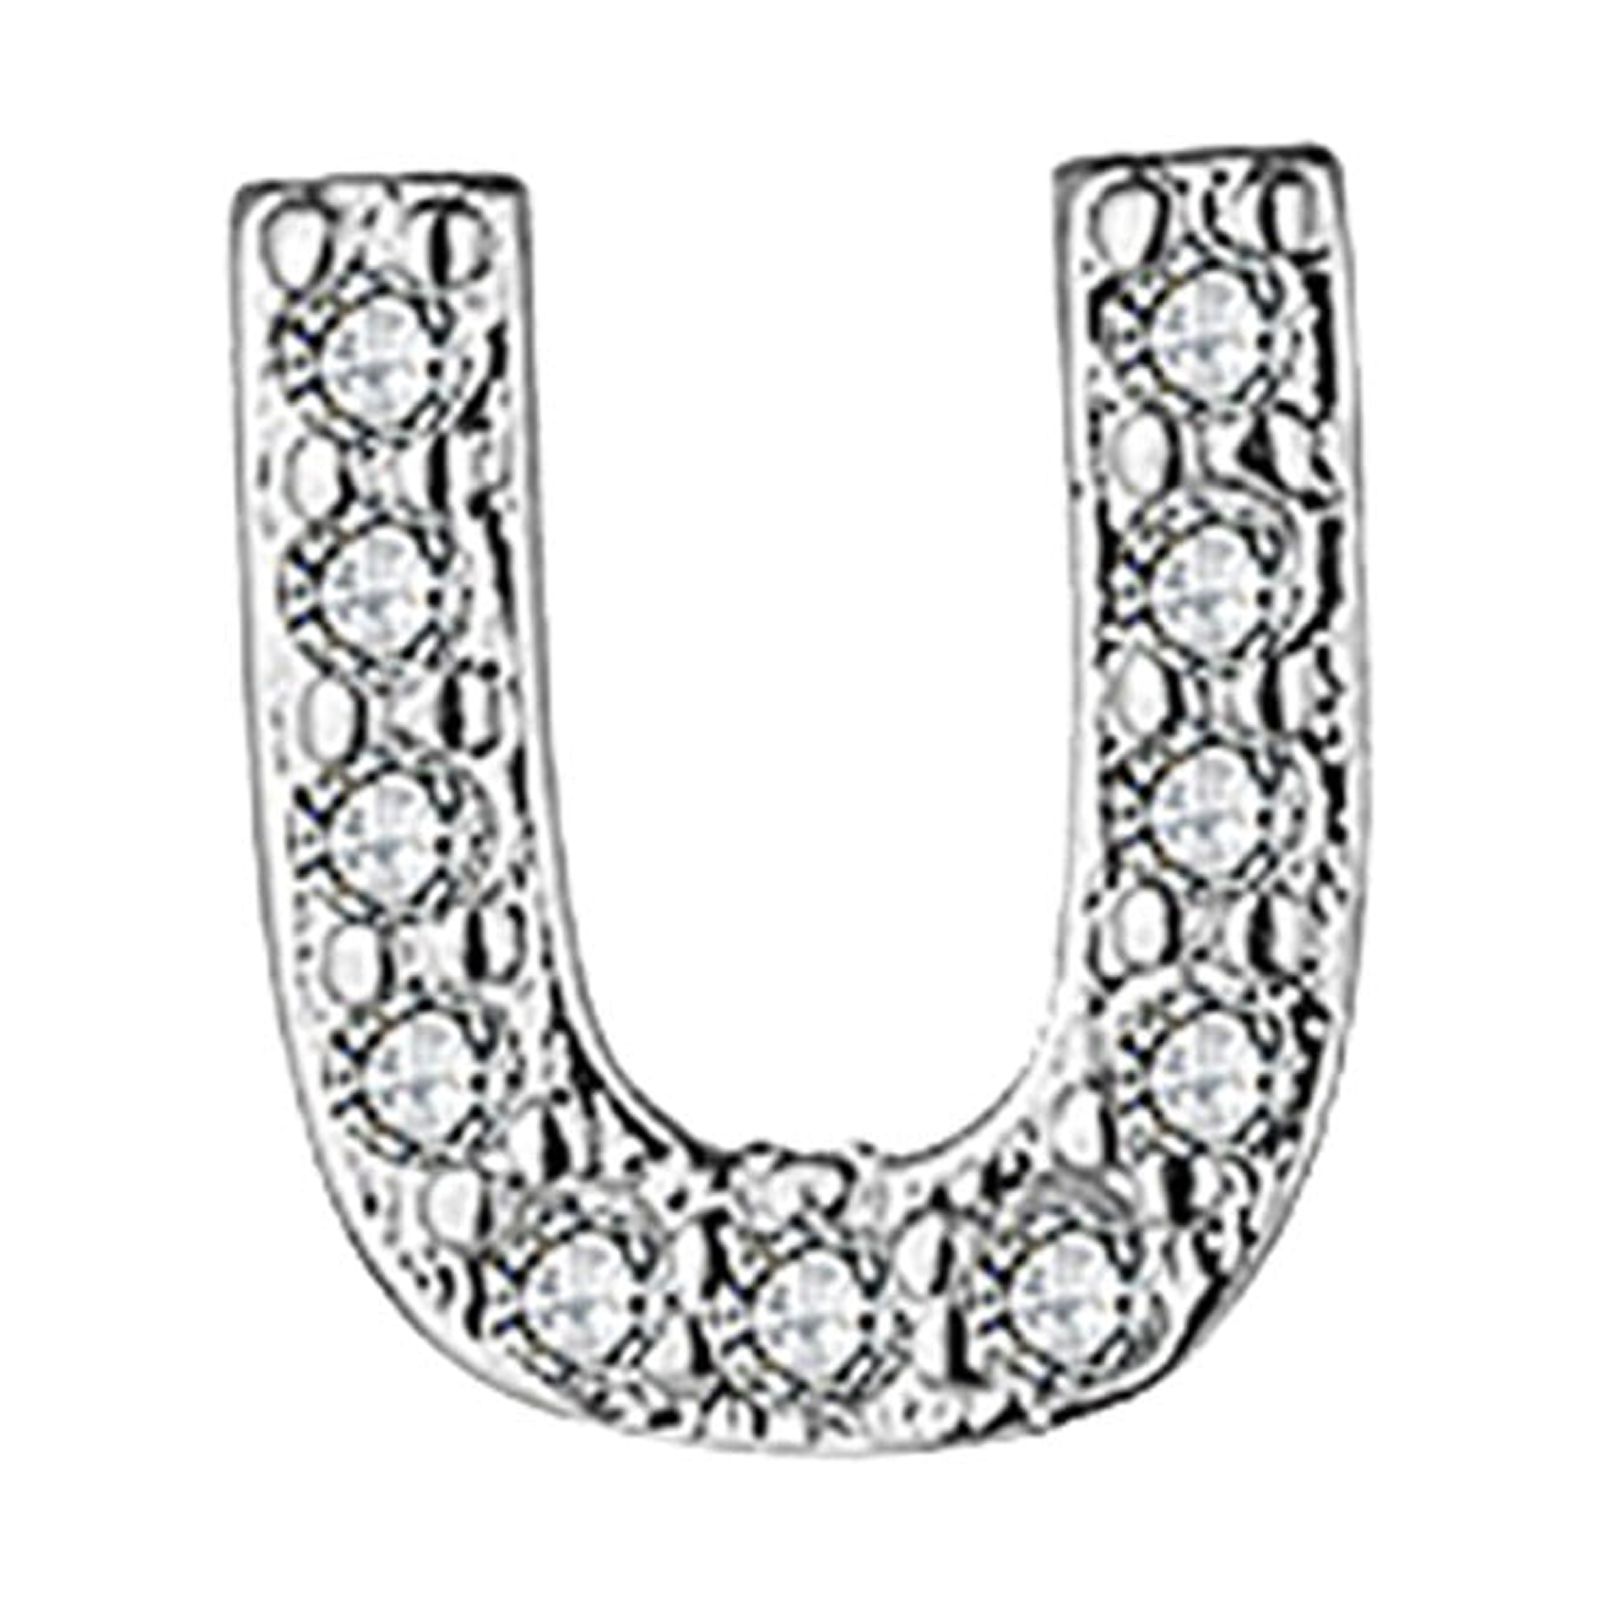 Kayannuo Christmas Clearance Earrings for Women Girls Initial Stud Earring zircon 5mm AZ Capital Letter Gifts For Women - image 1 of 2